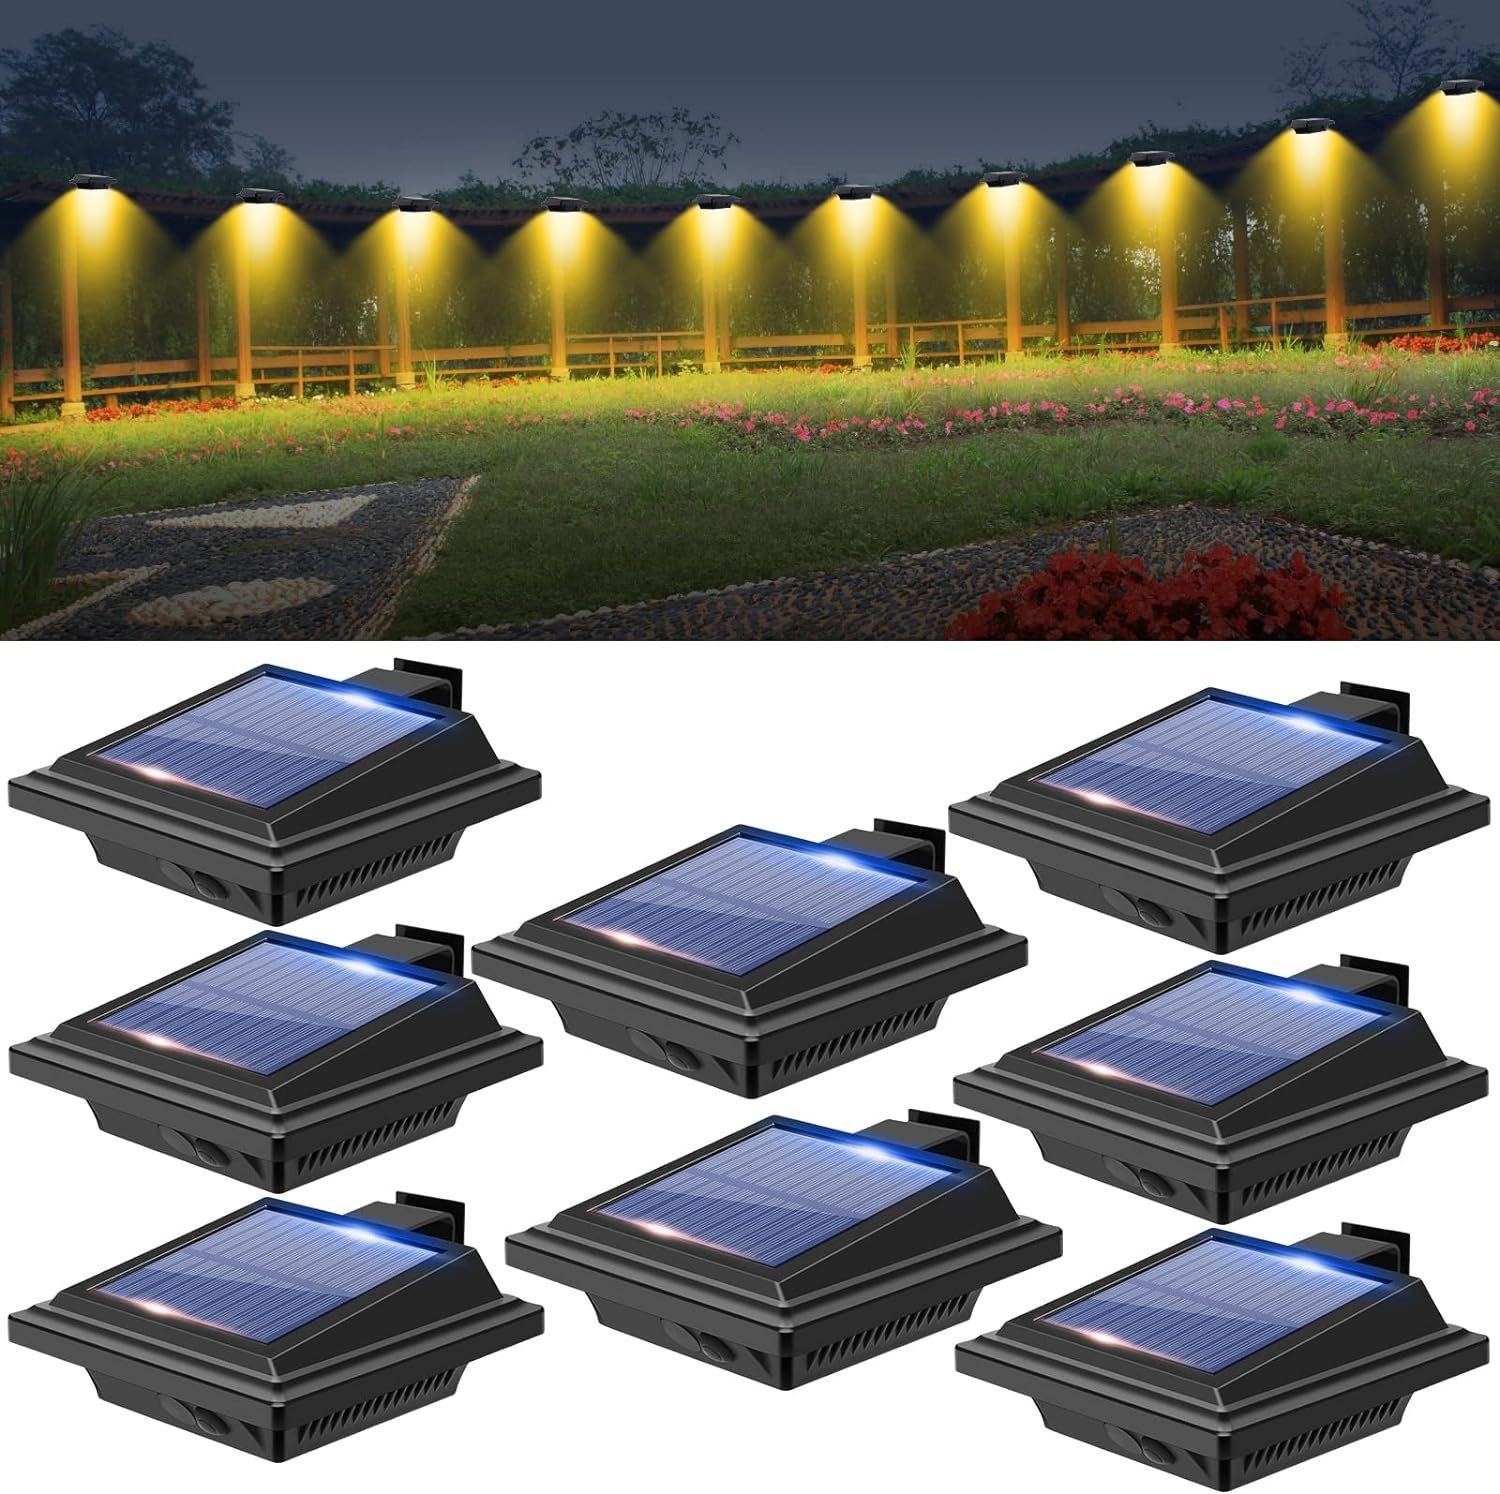 KEENZO Dachrinnenleuchte 8Stk.40LEDs Solarlampen für Außen dachrinnen solarleuchten | Dachrinnenleuchten